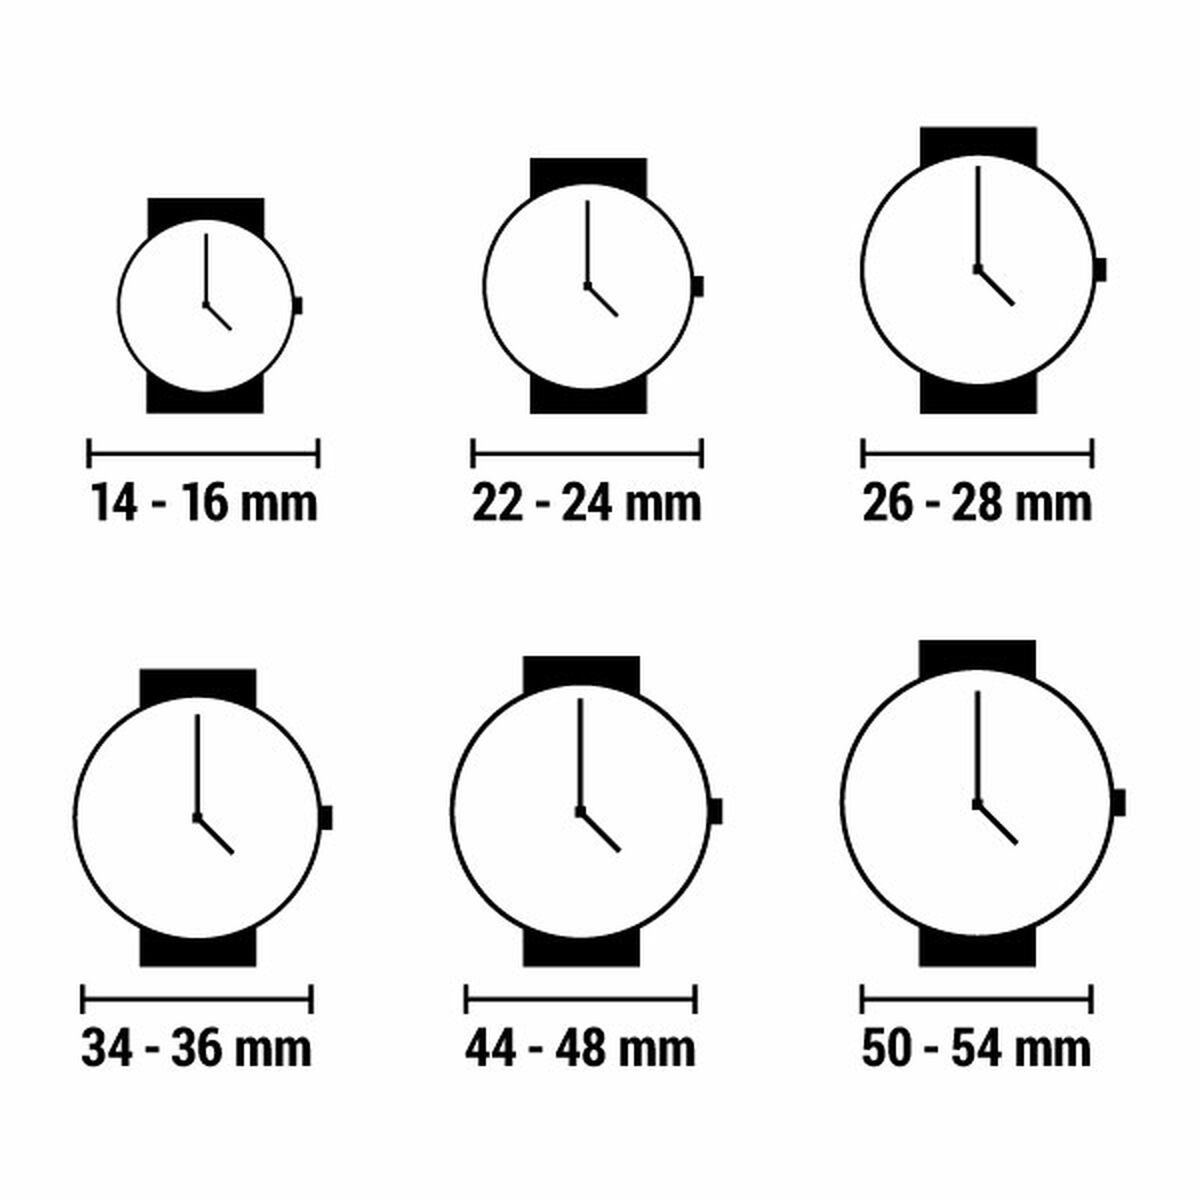 Horloge Dames Versace VE81045-22 (Ø 38 mm)